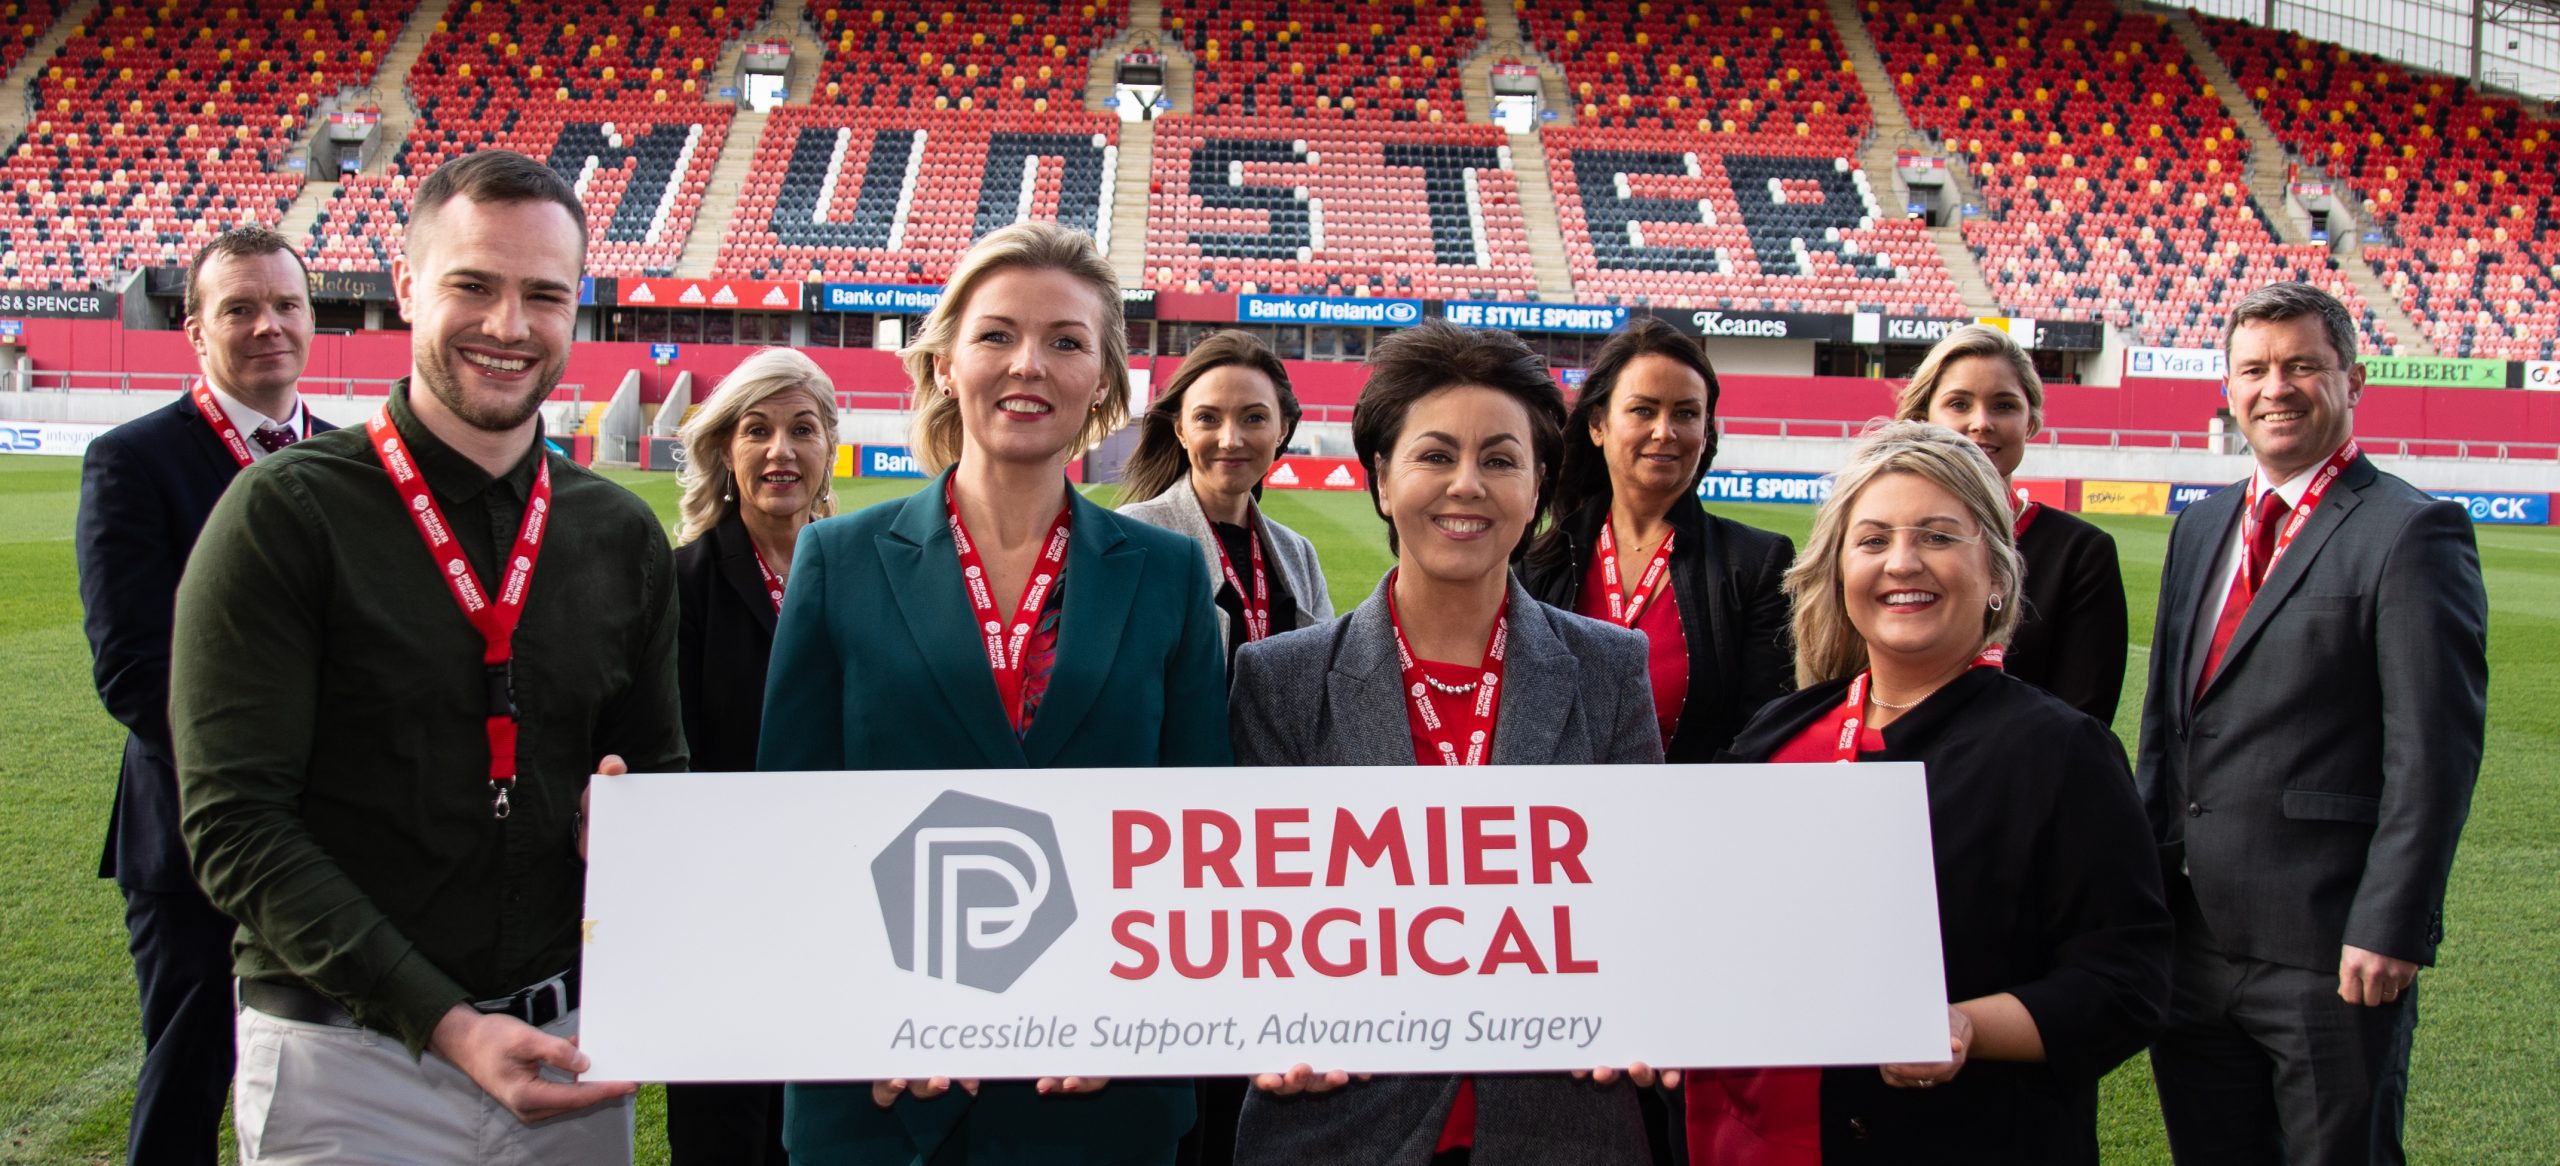 Premier Surgical Brand Launch